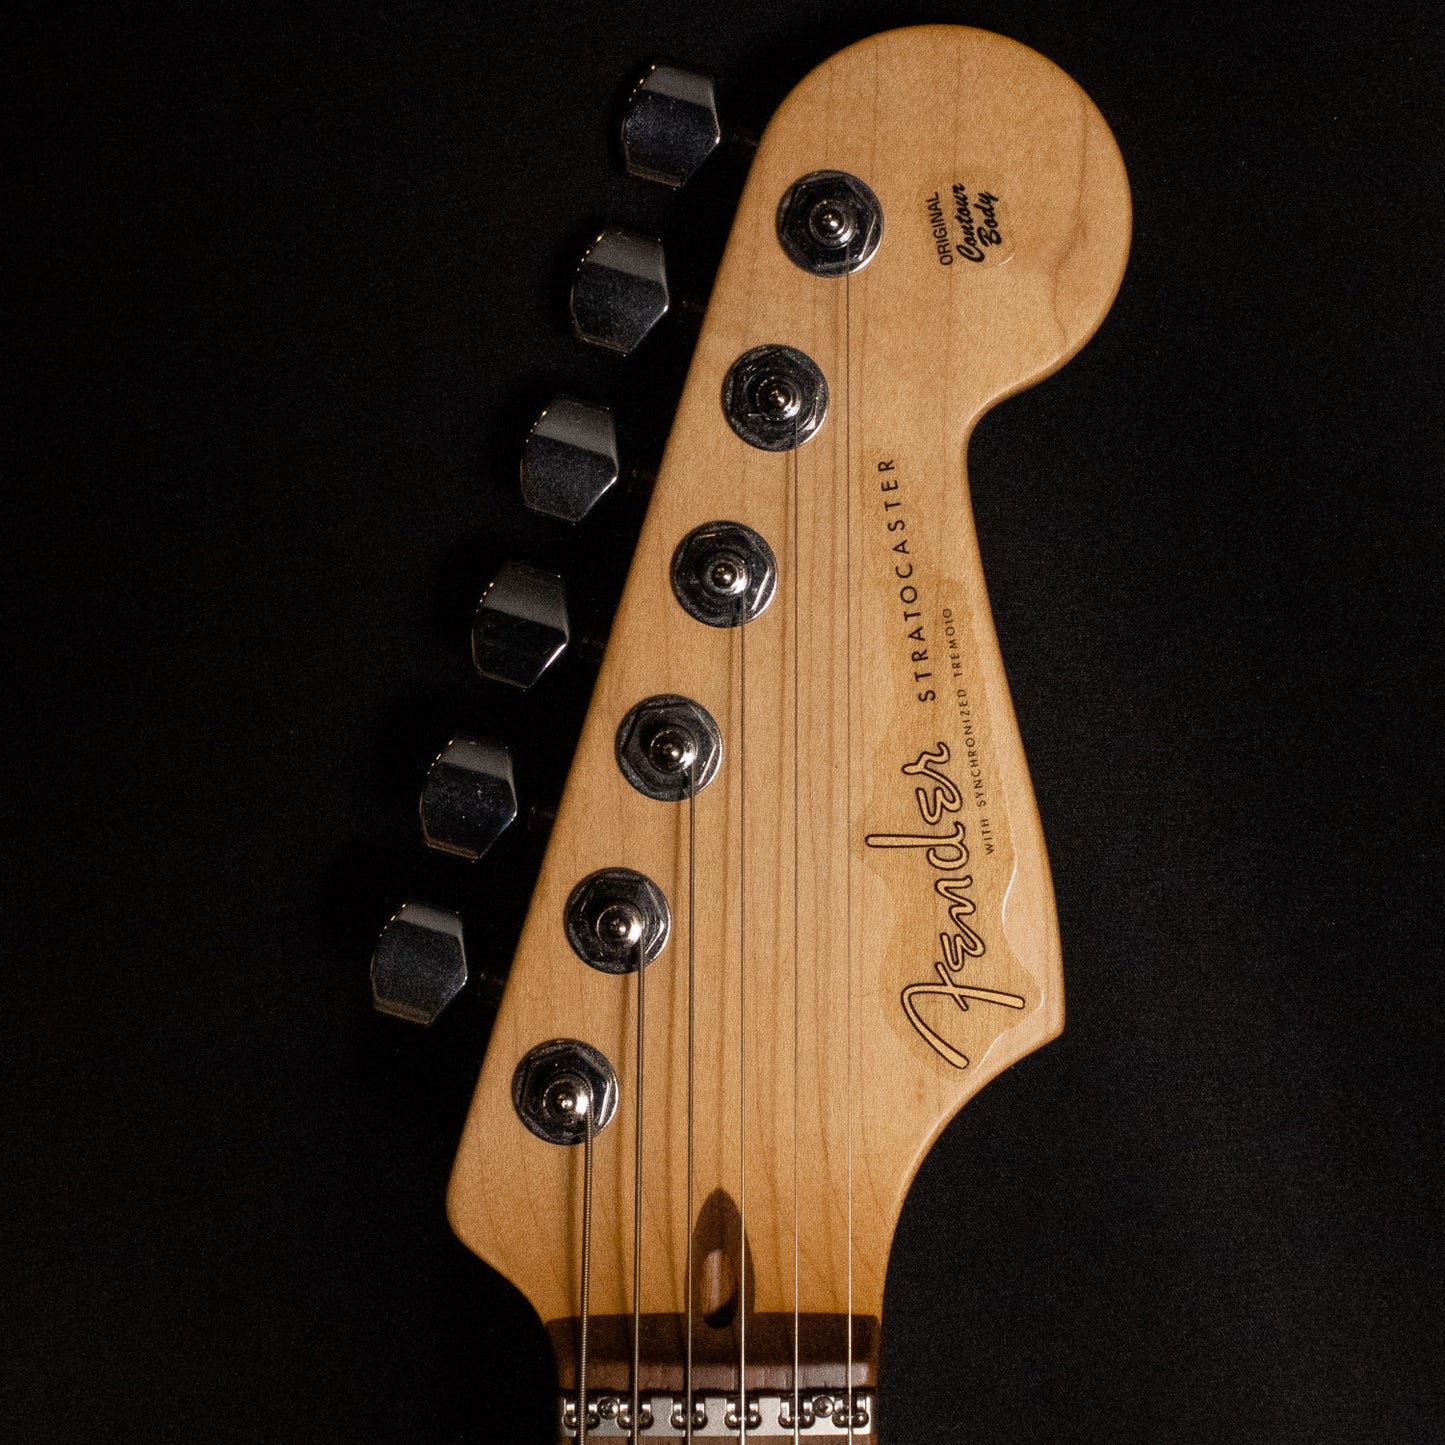 2015 Fender Custom Shop Jeff Beck Stratocaster - Sea Foam Green